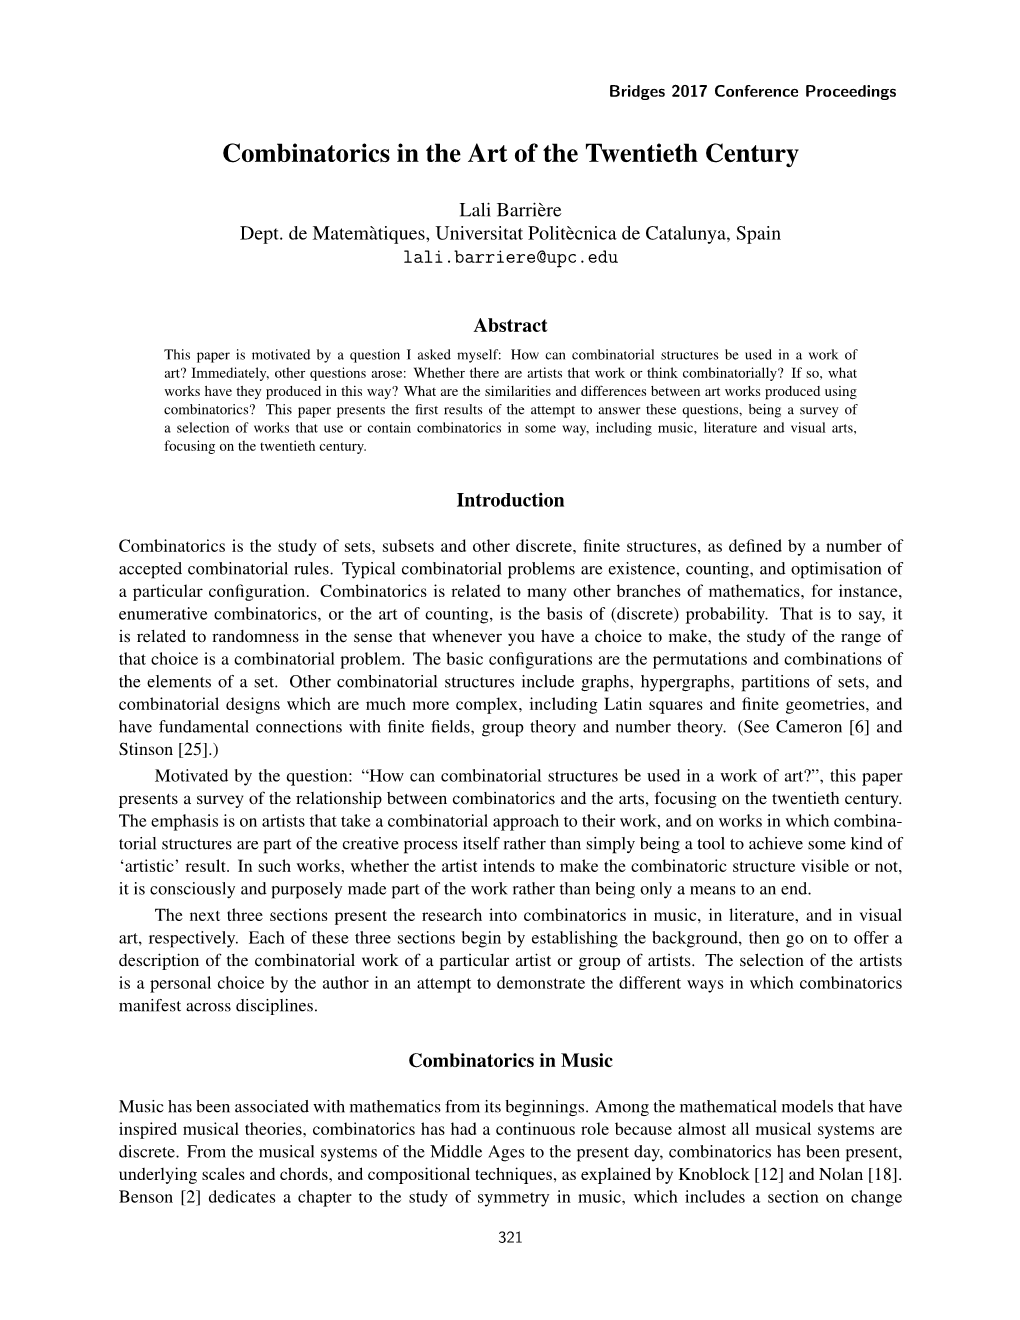 Combinatorics in the Art of the Twentieth Century